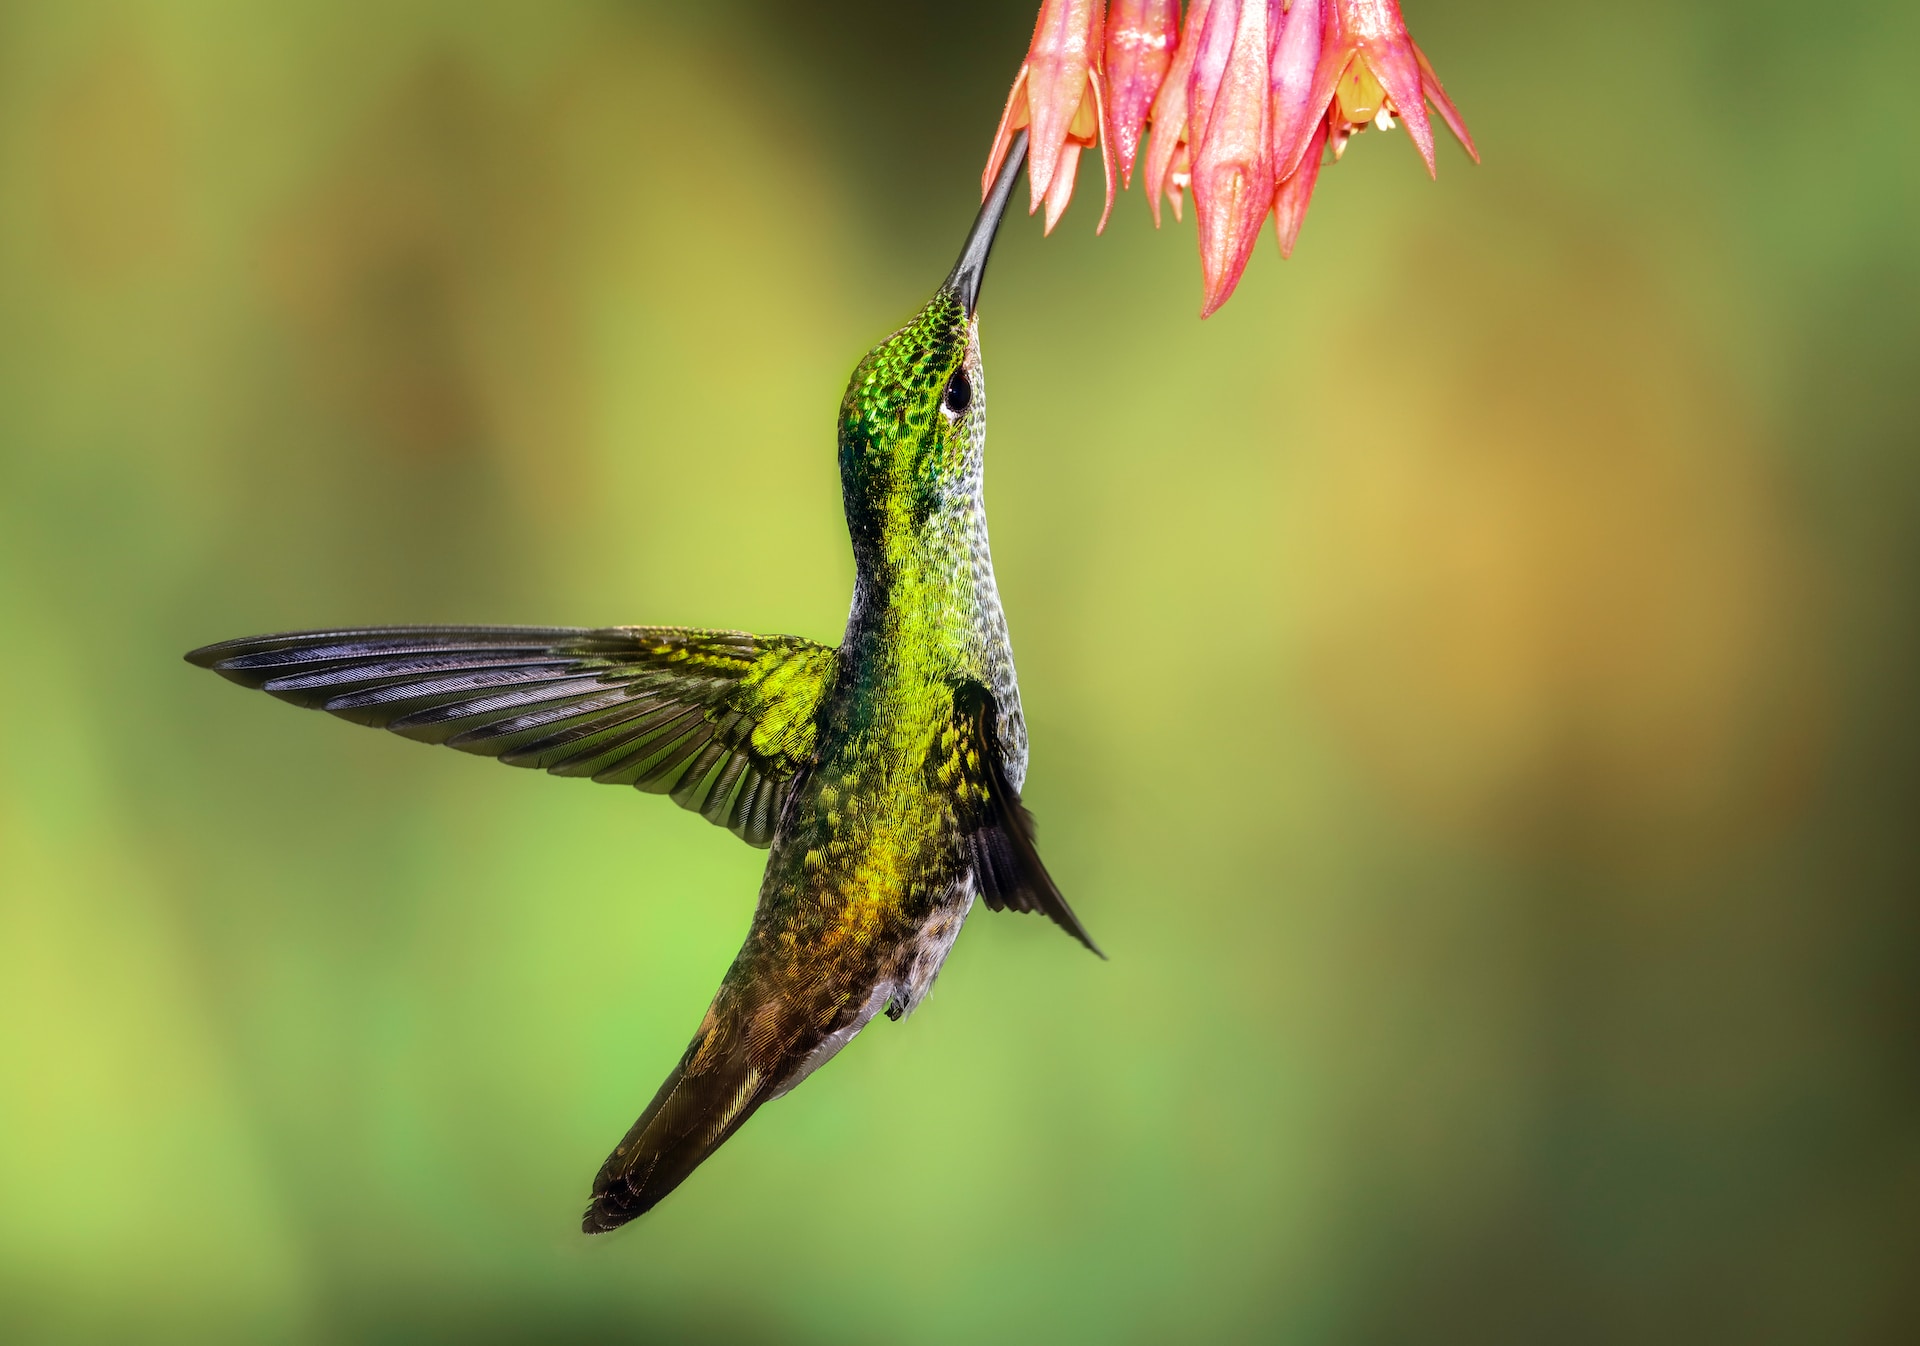 Hummingbird navigating danger